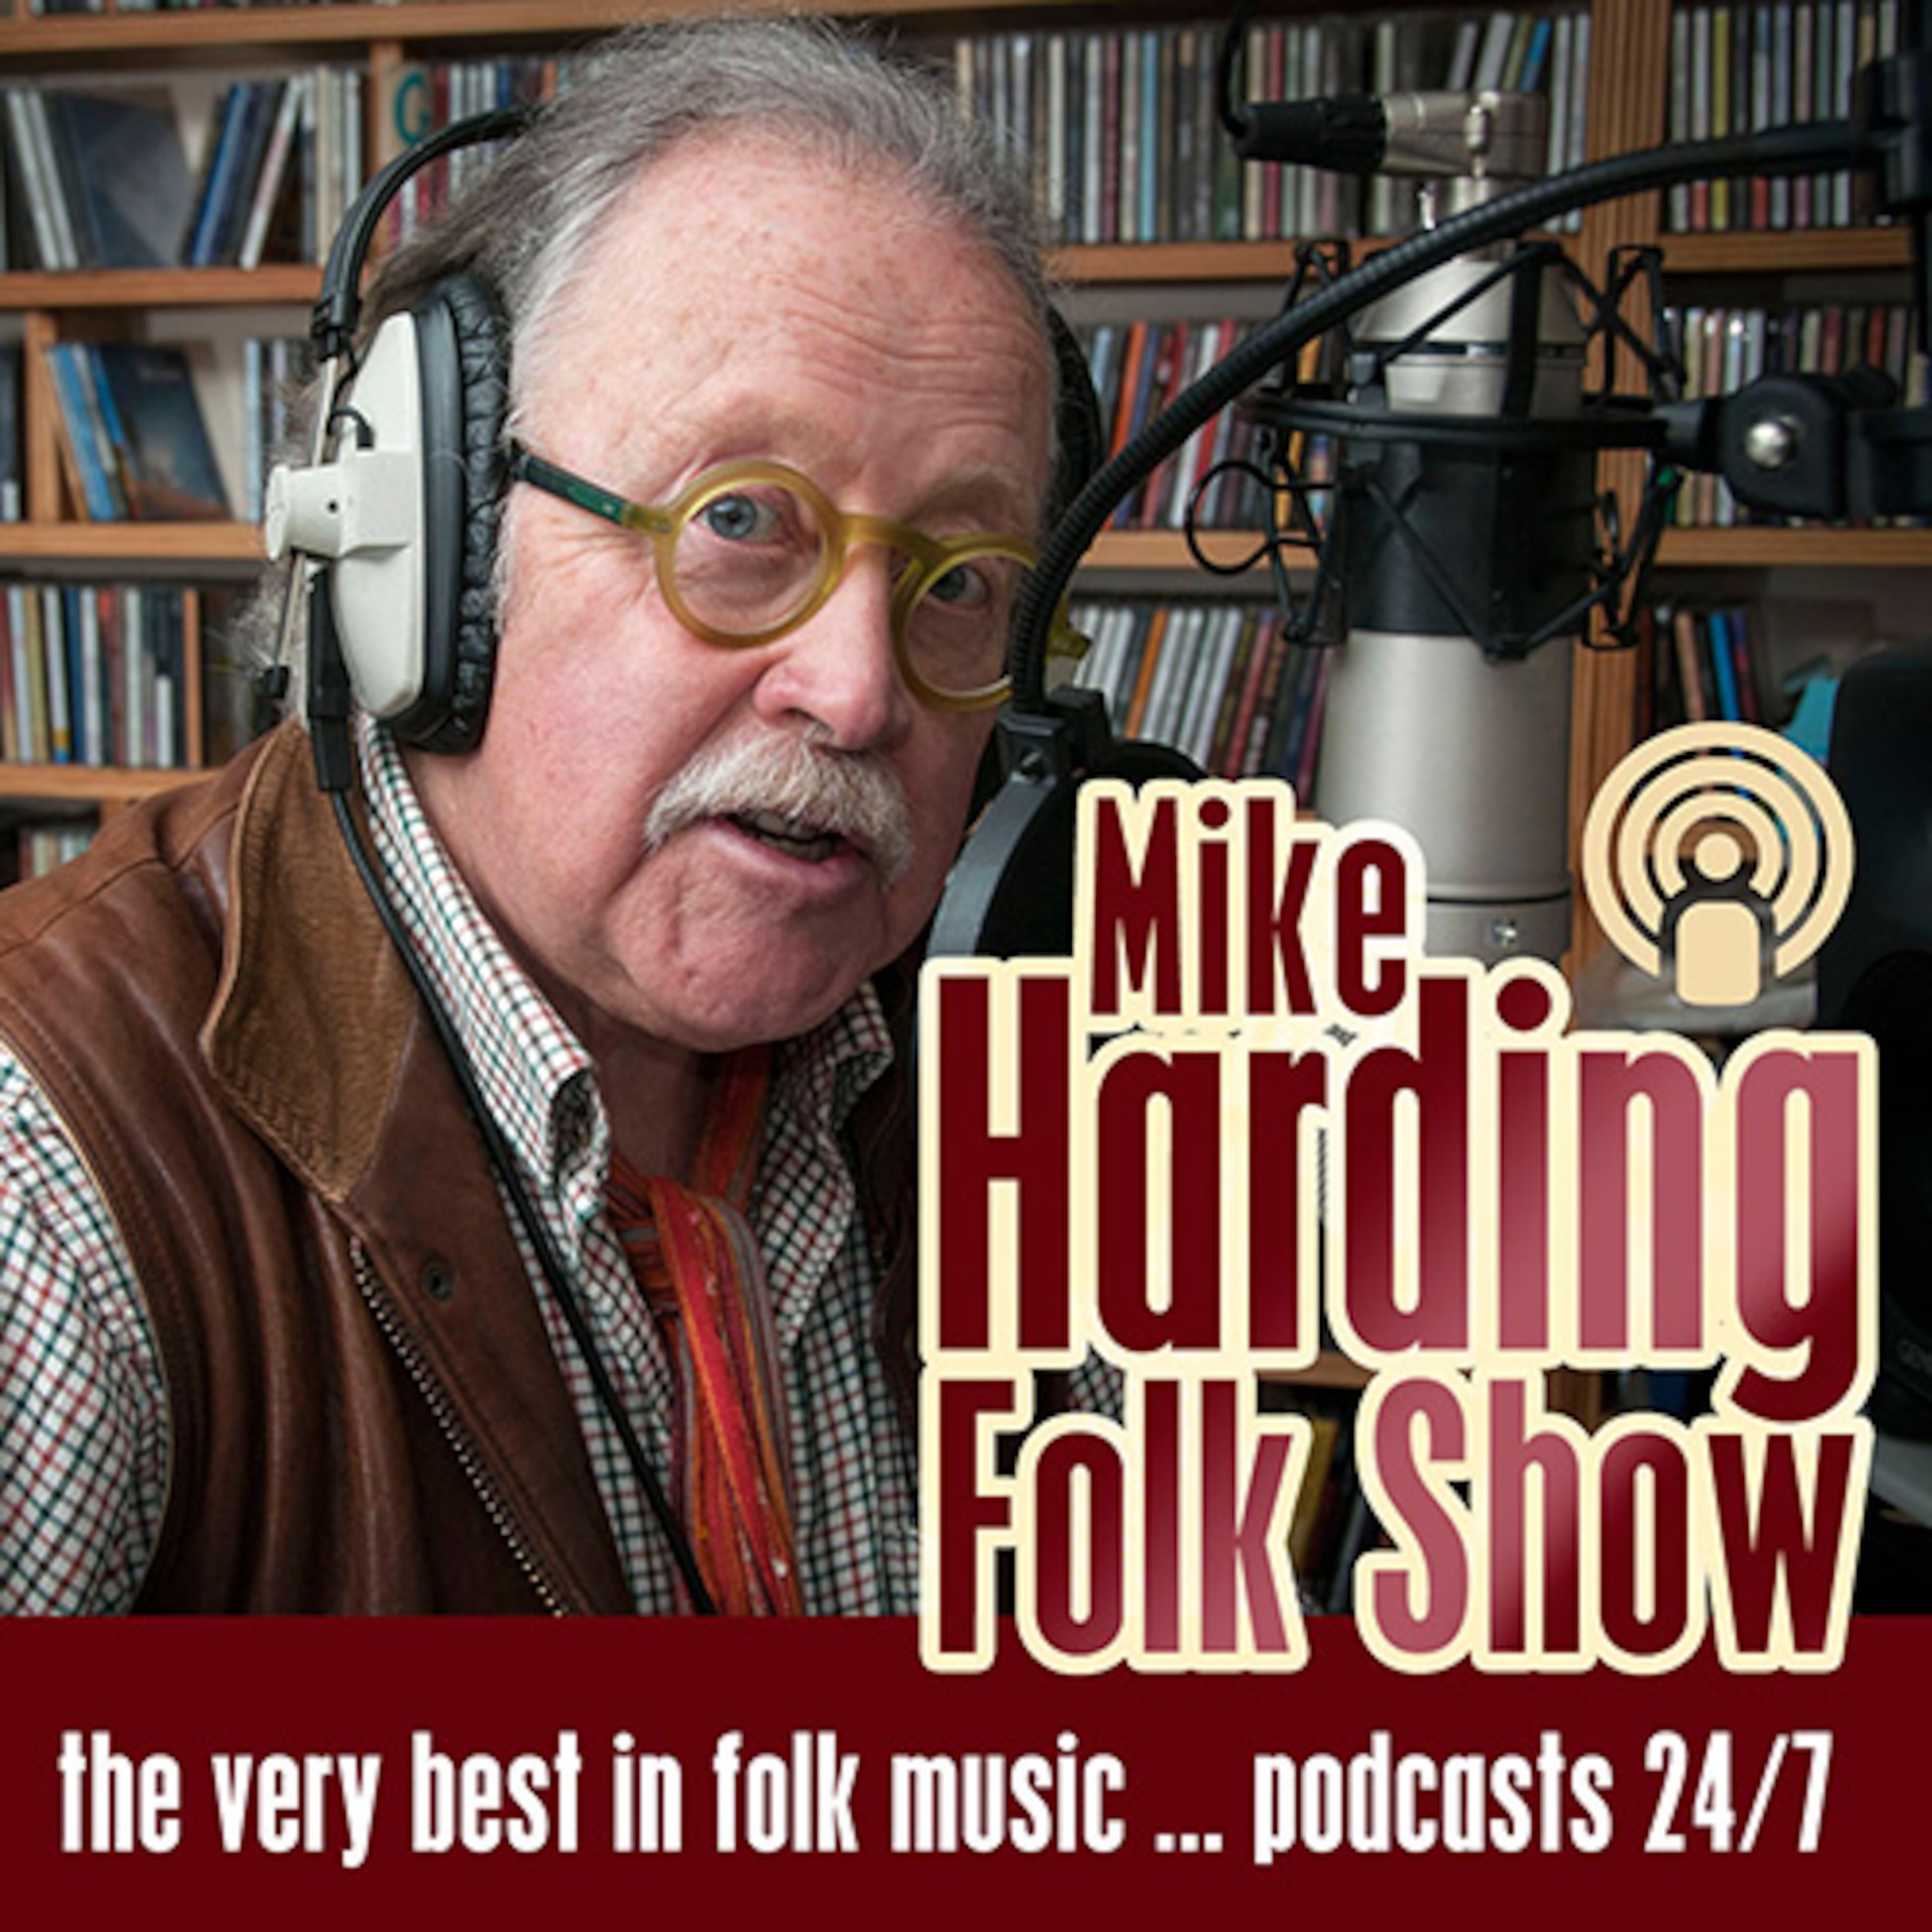 Mike Harding Folk Show 165